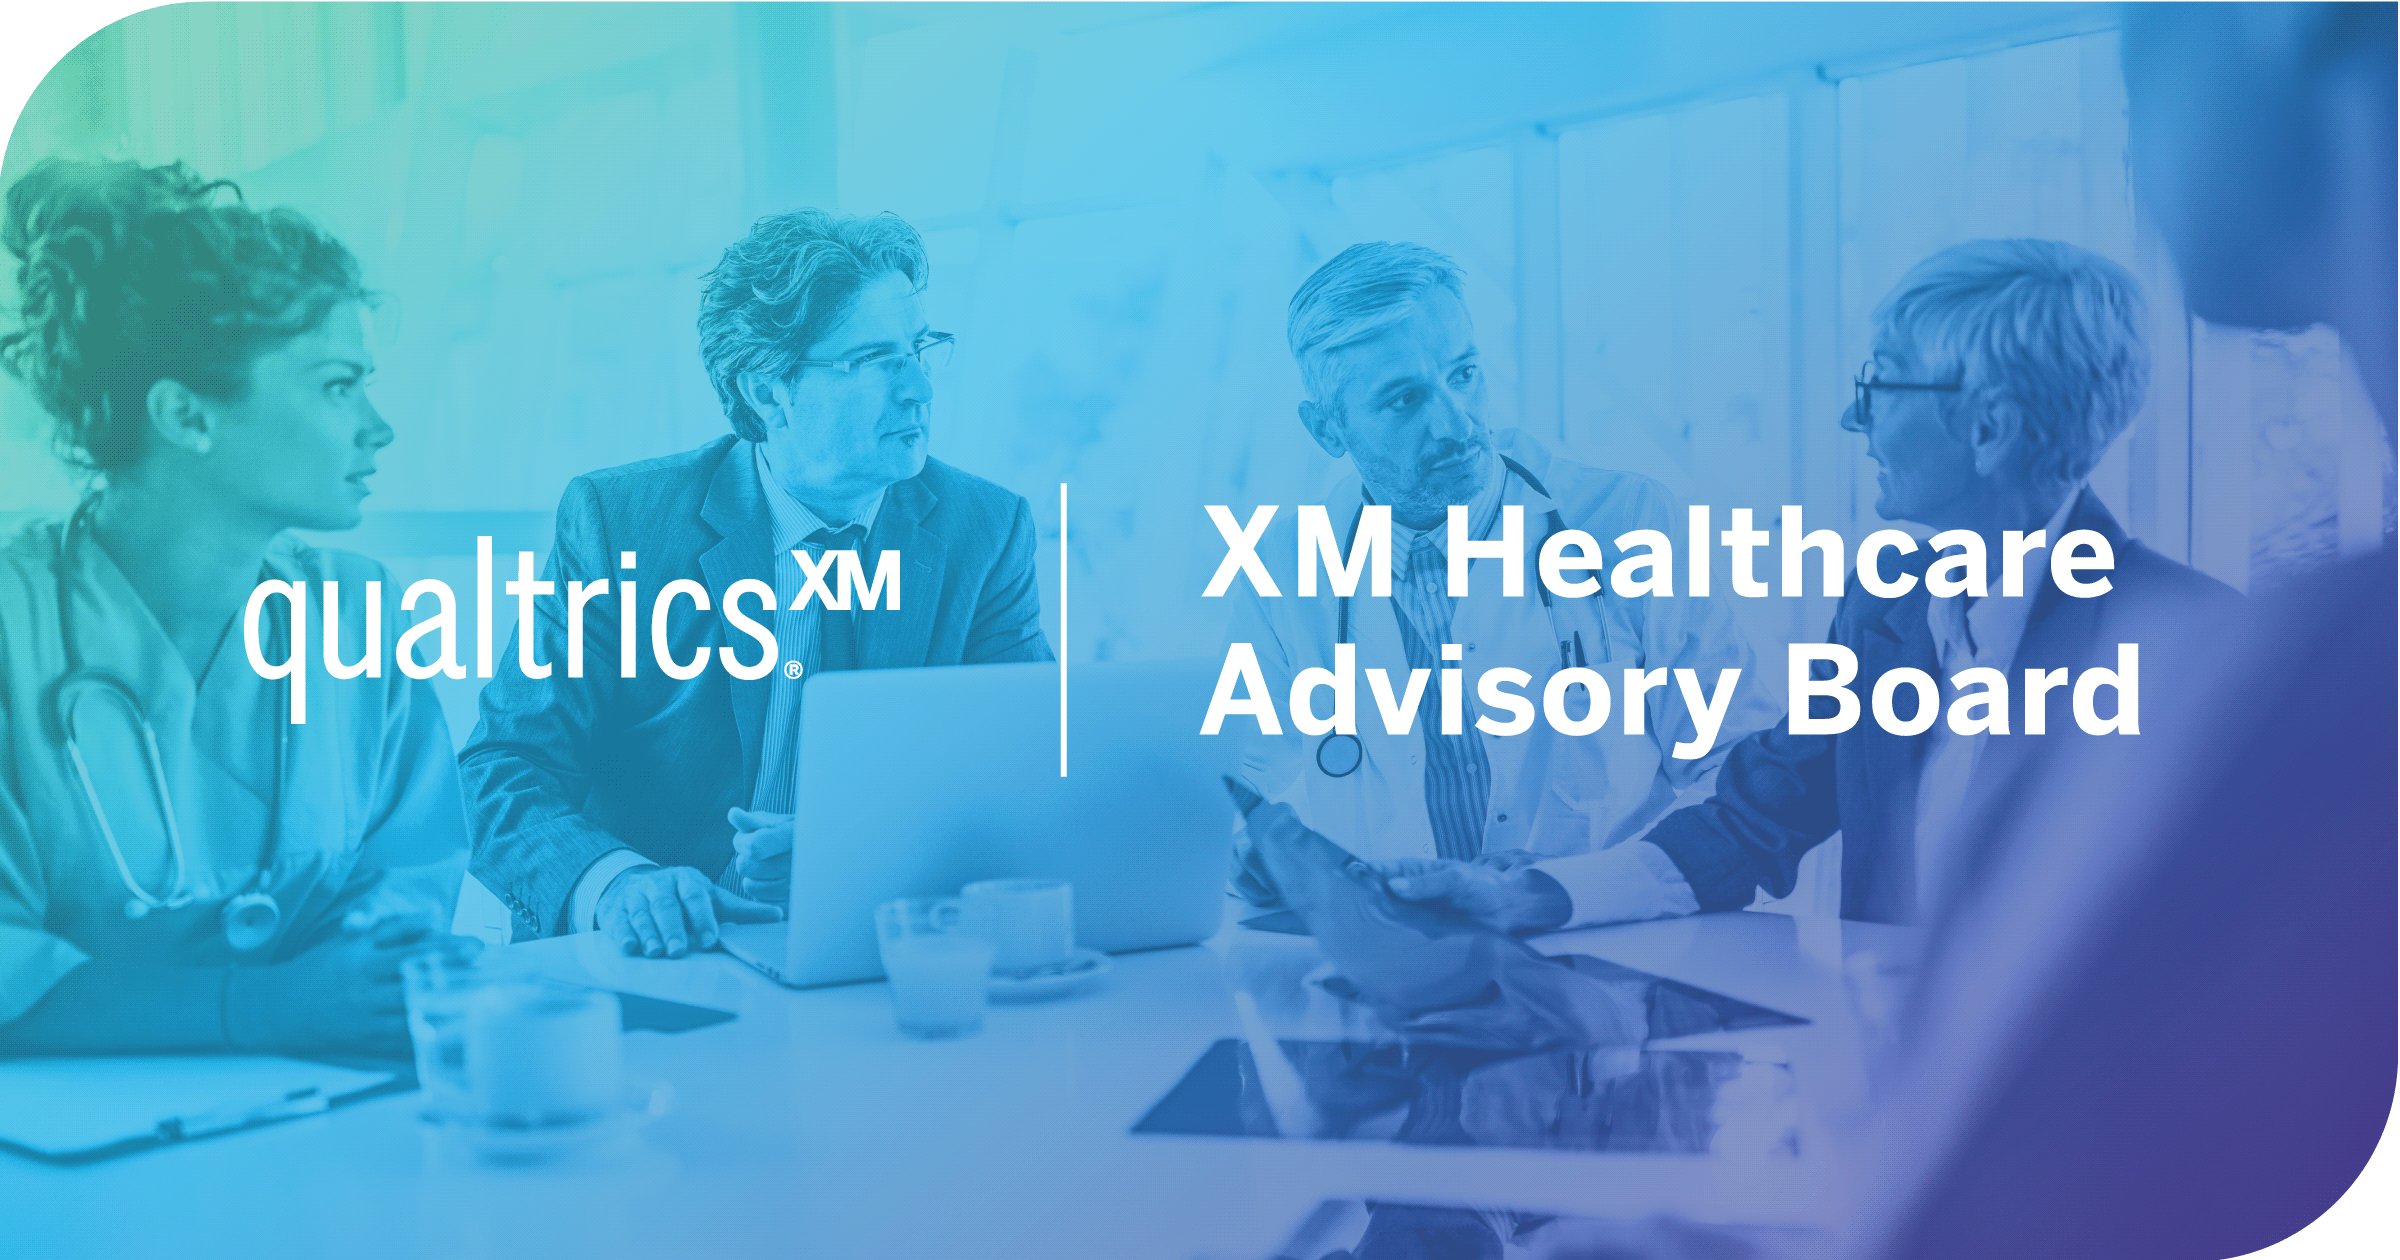 Qualtrics Announces the XM Healthcare Advisory Board to Accelerate